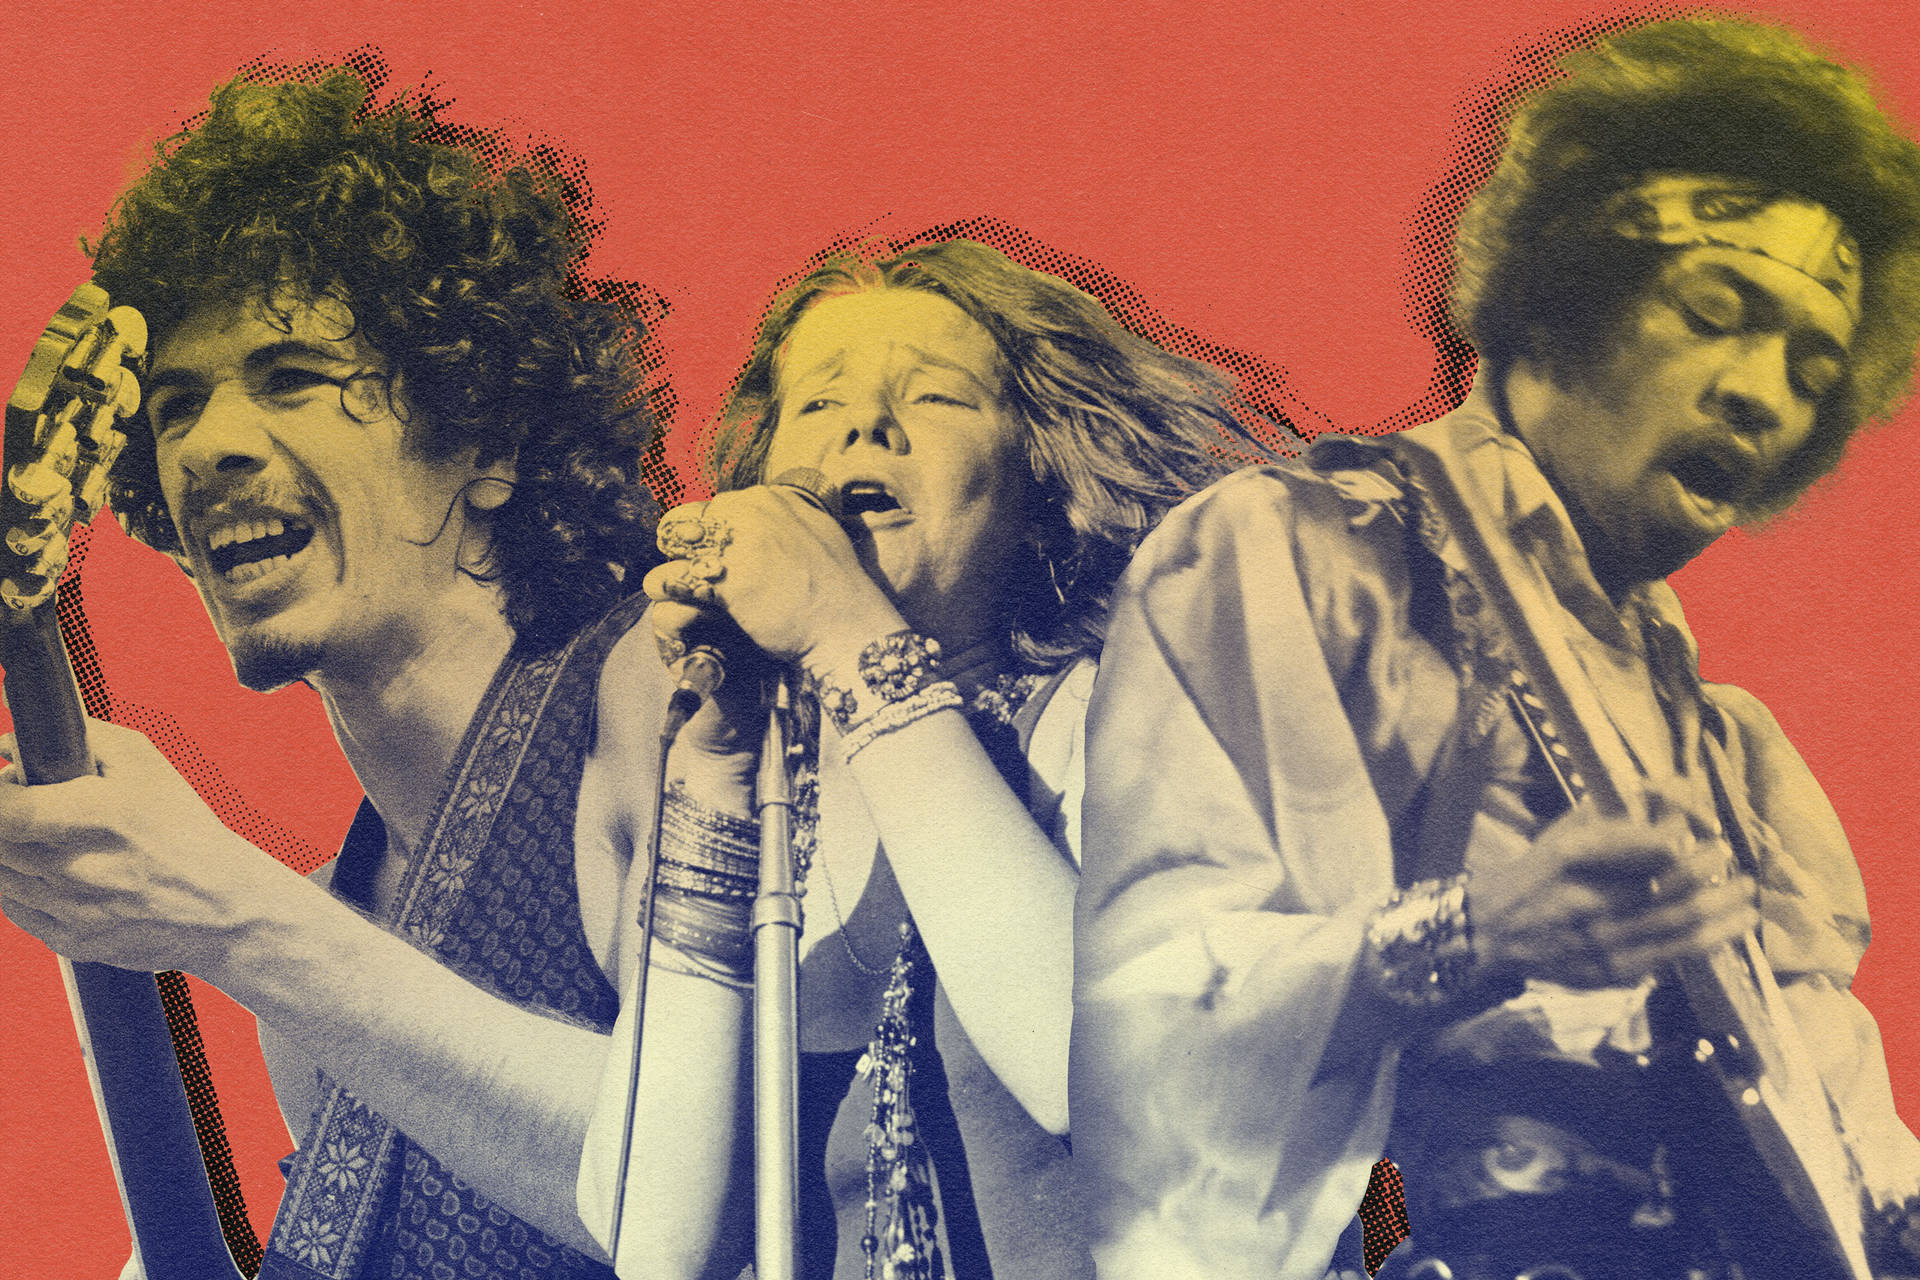 Woodstock Headliners Collage Background